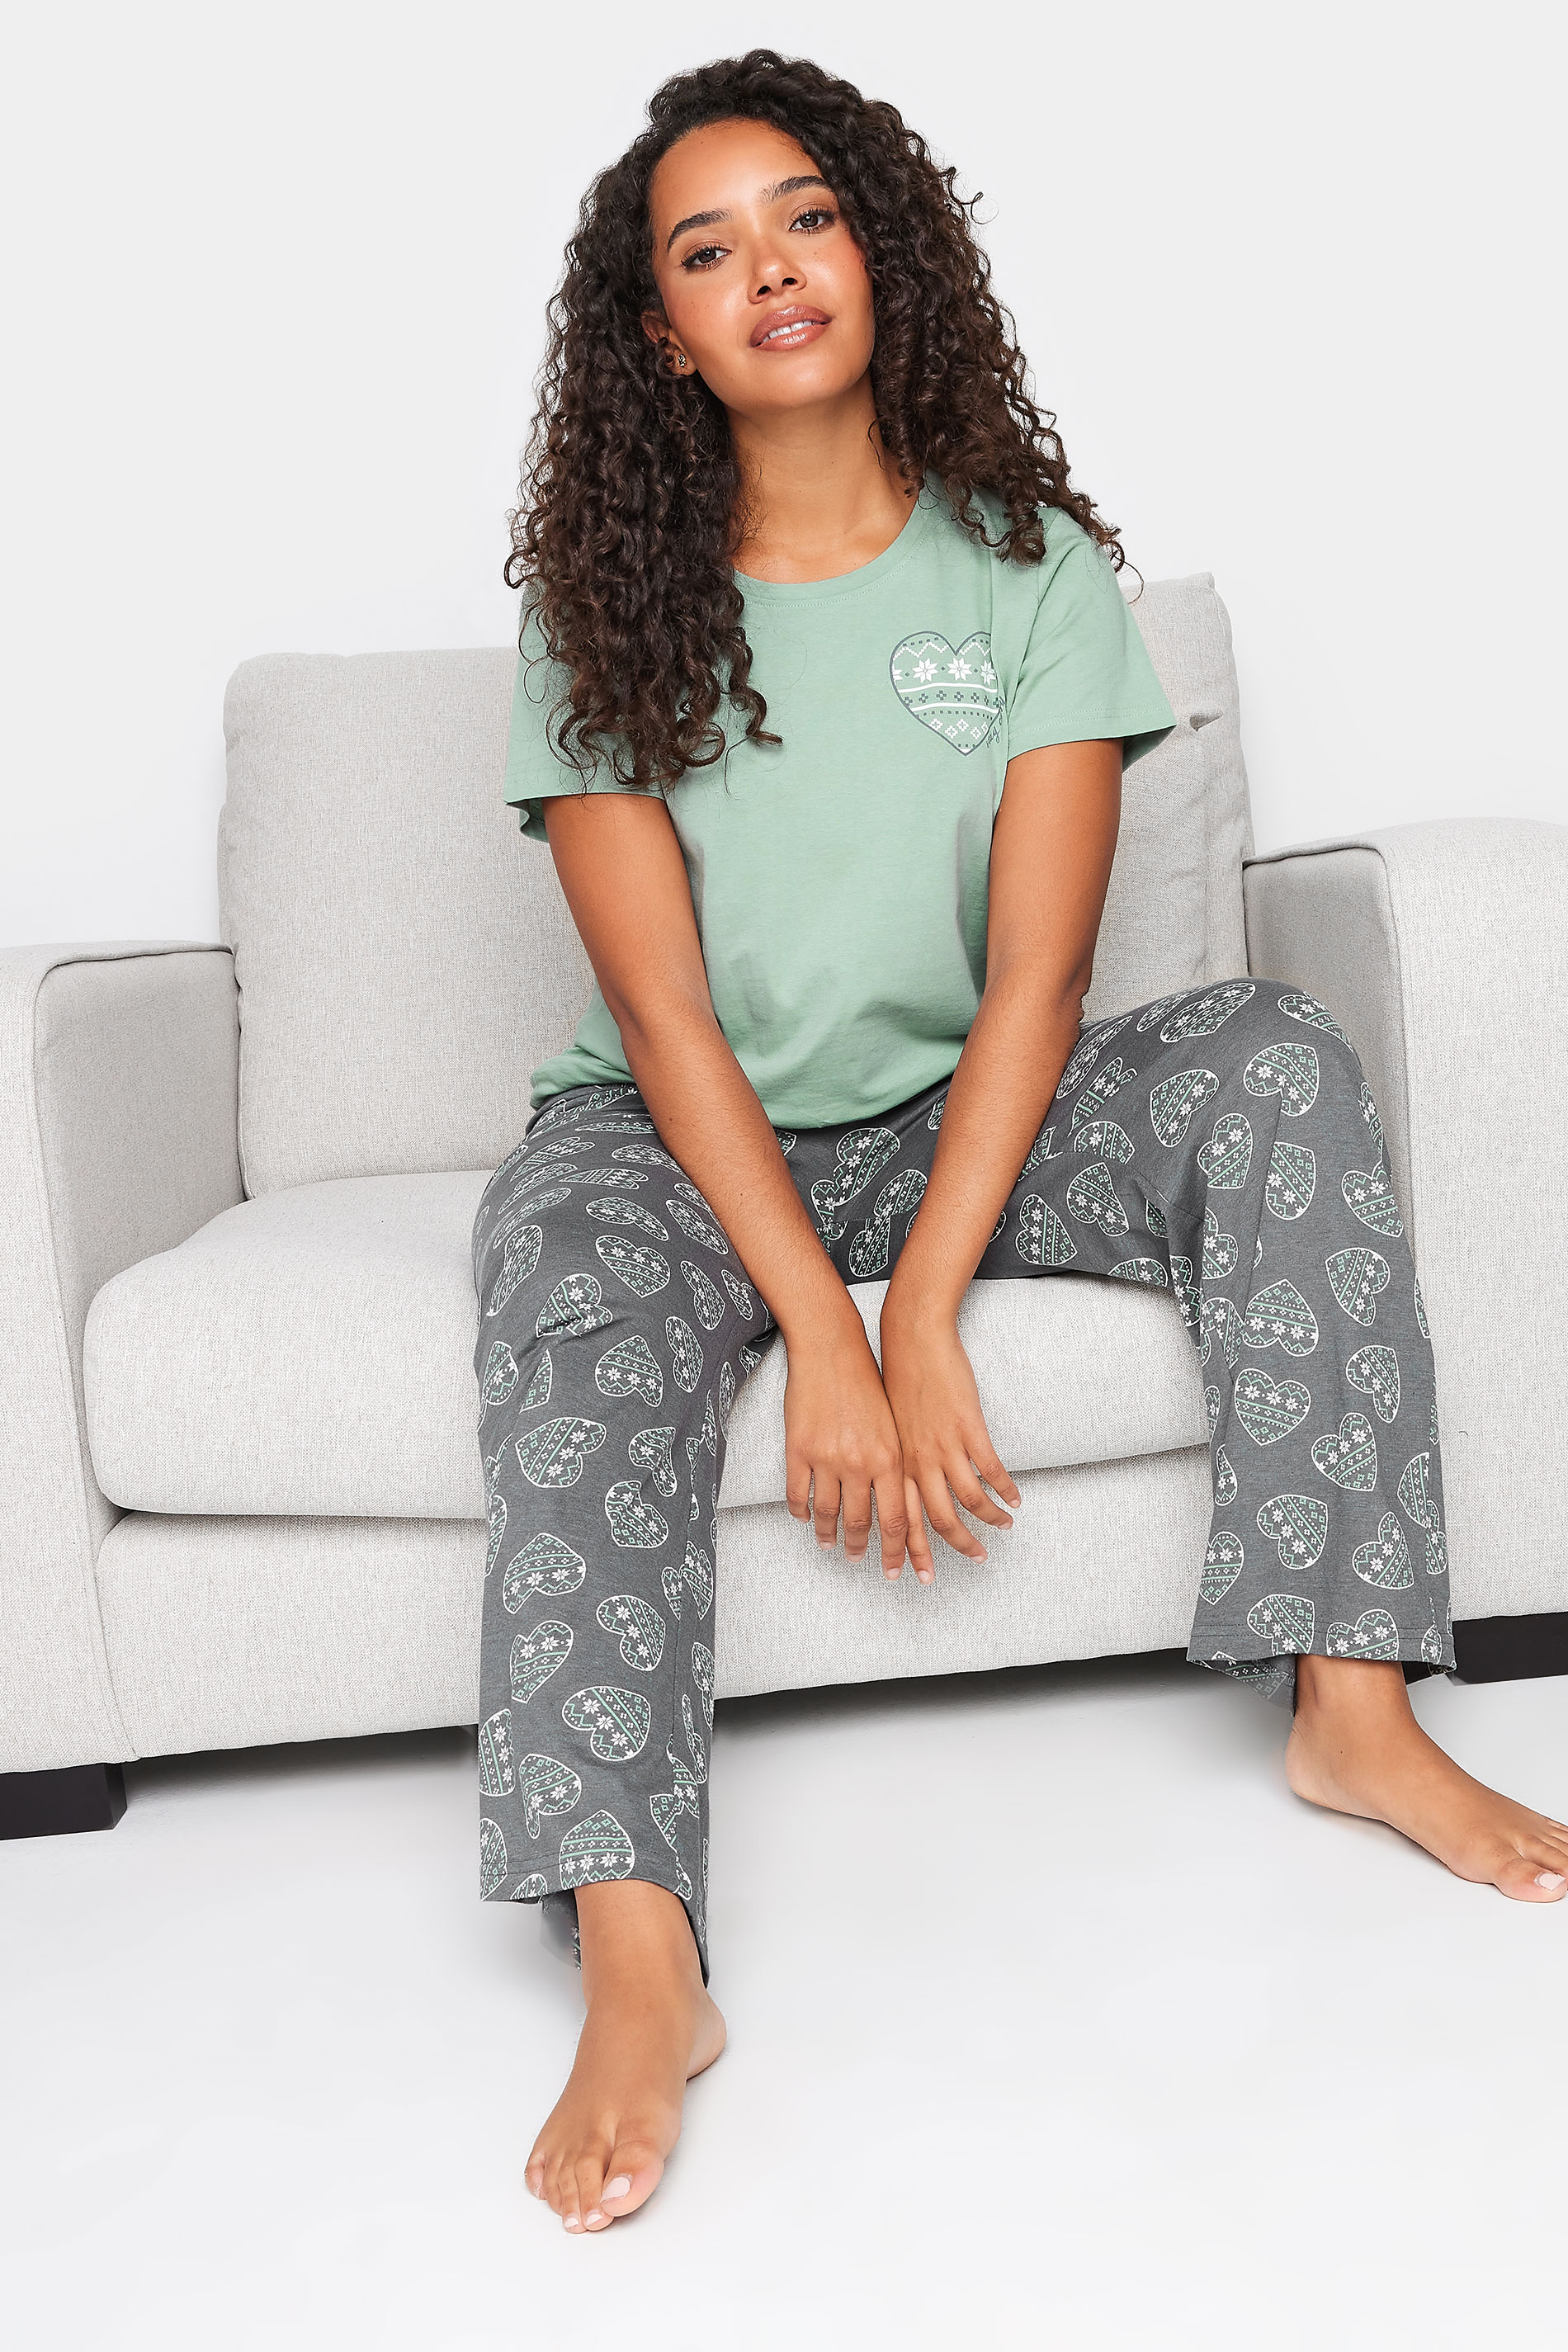 M&Co Green & Grey Cotton Fairisle Heart Print Wide Leg Pyjama Set | M&Co 1